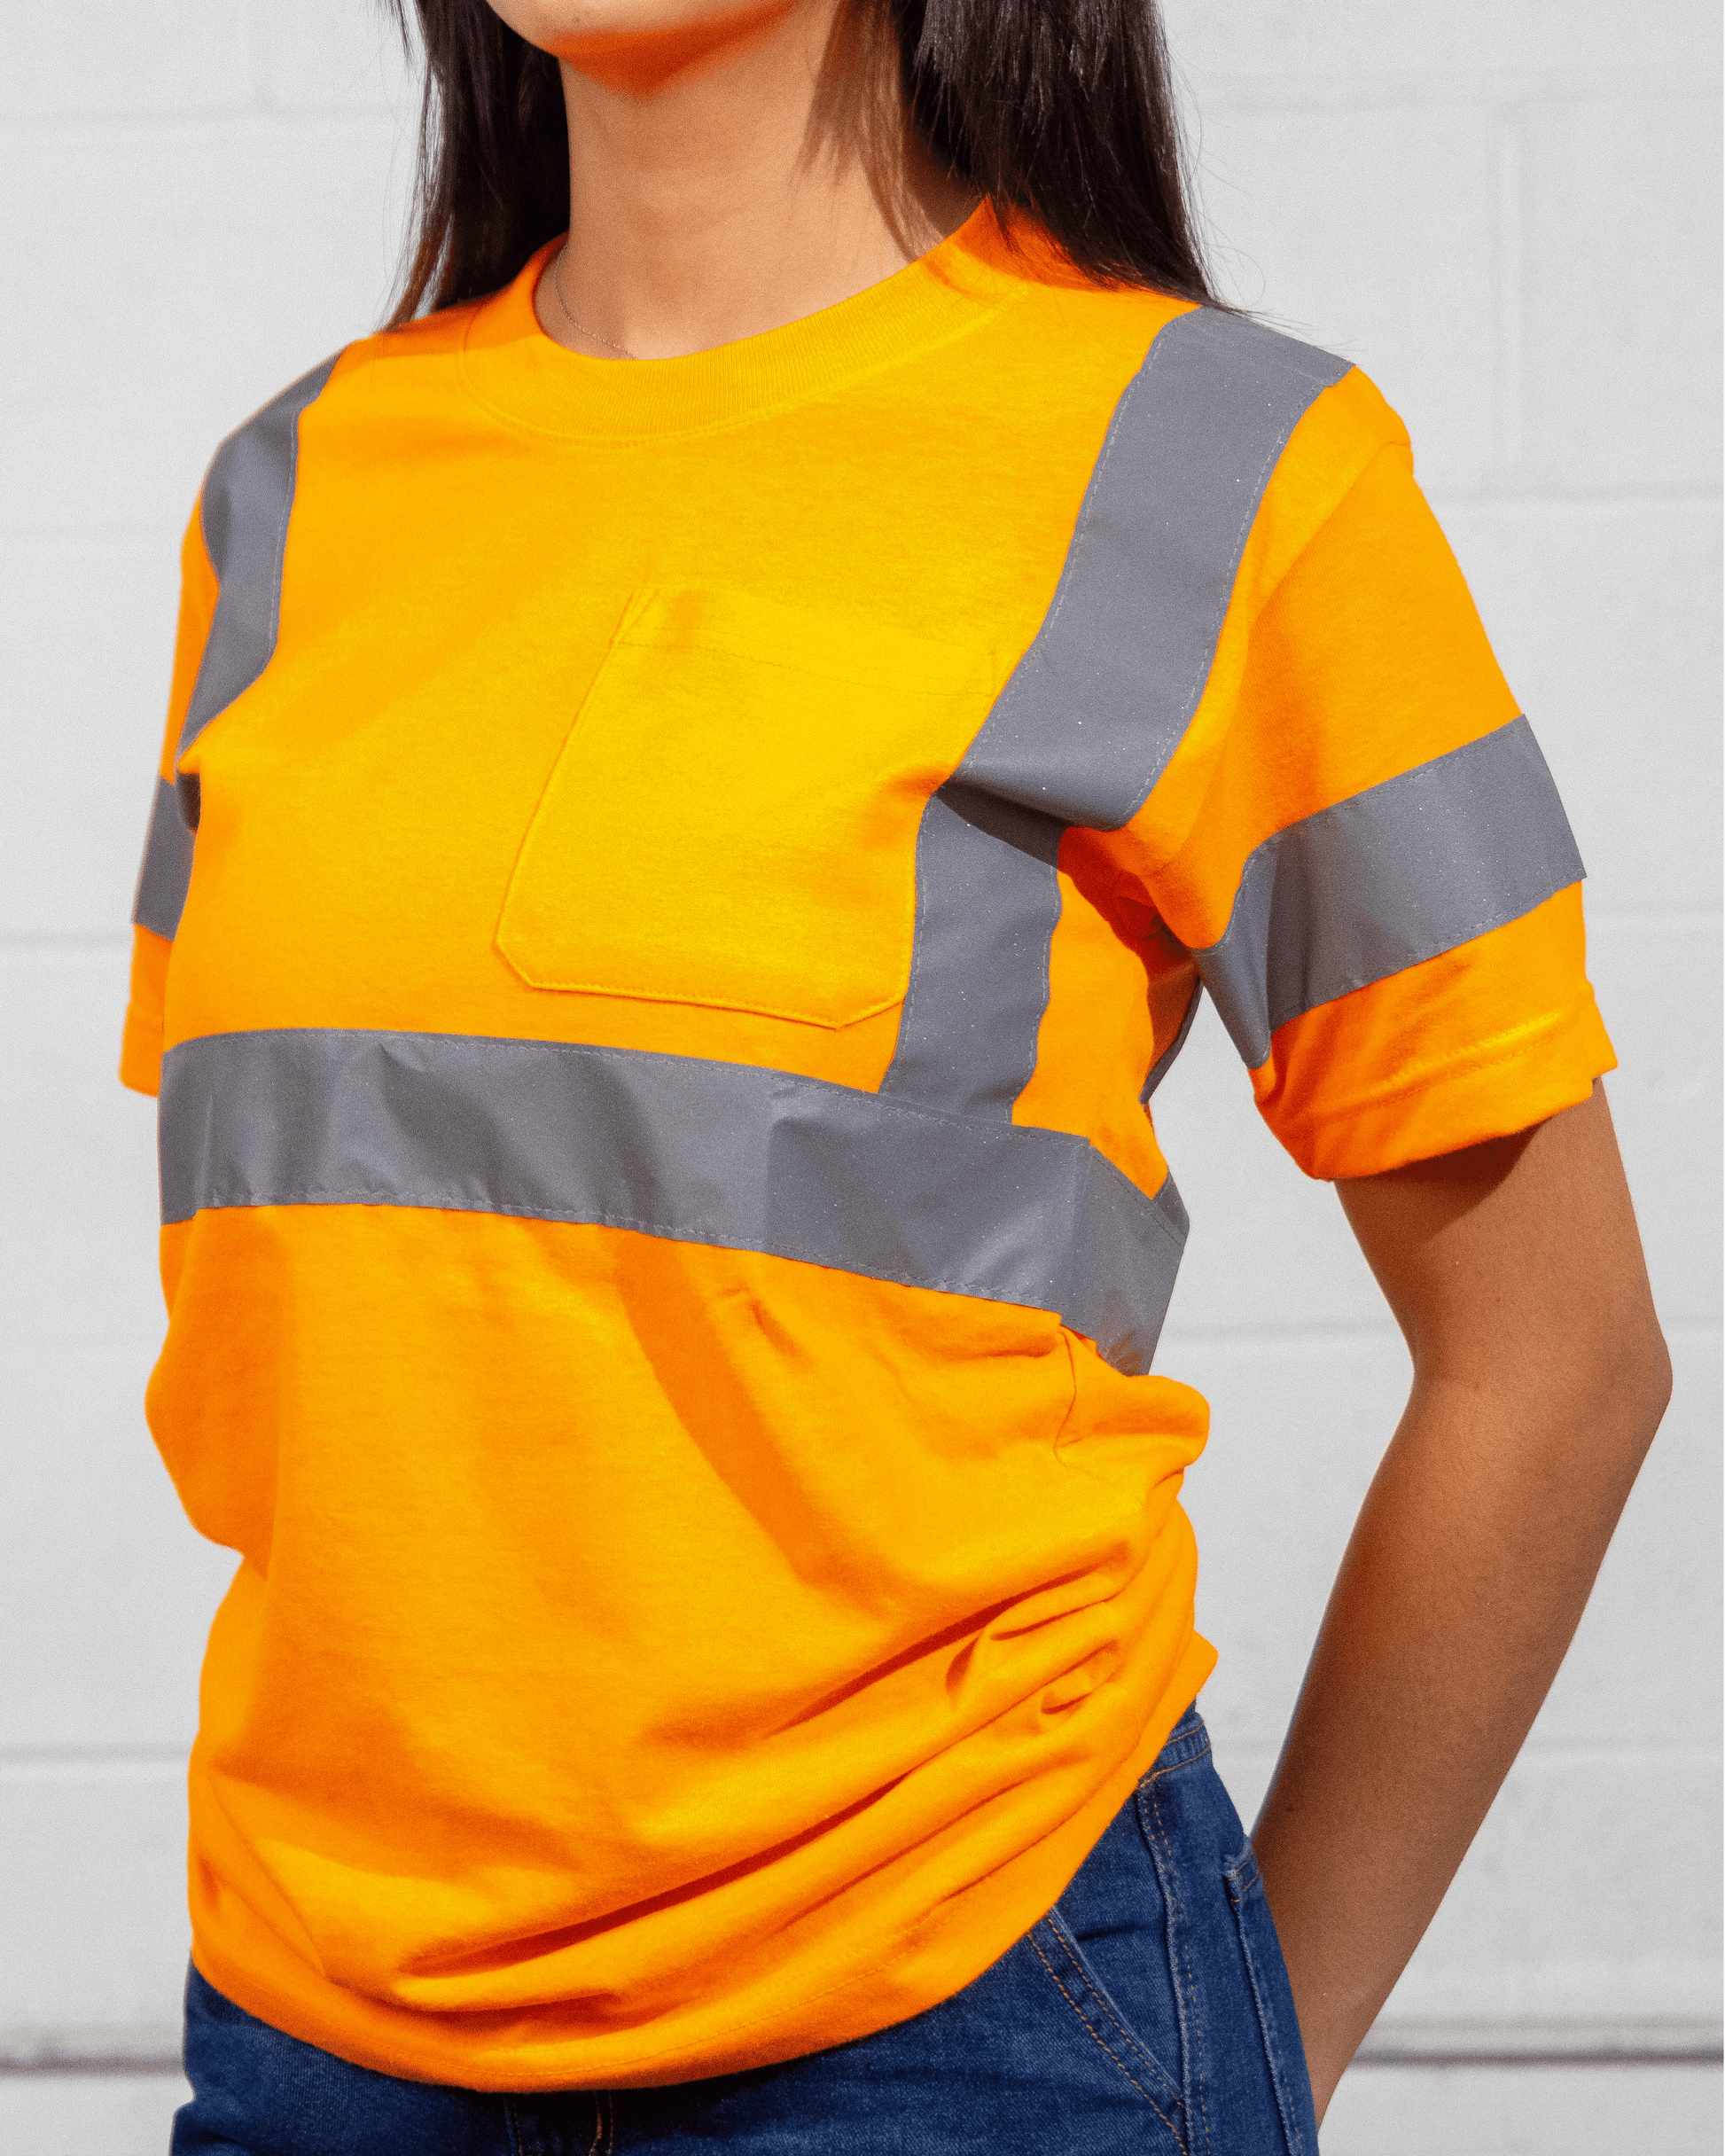 A woman wearing a Suna Cotton® Safety Orange Reflective T-shirt